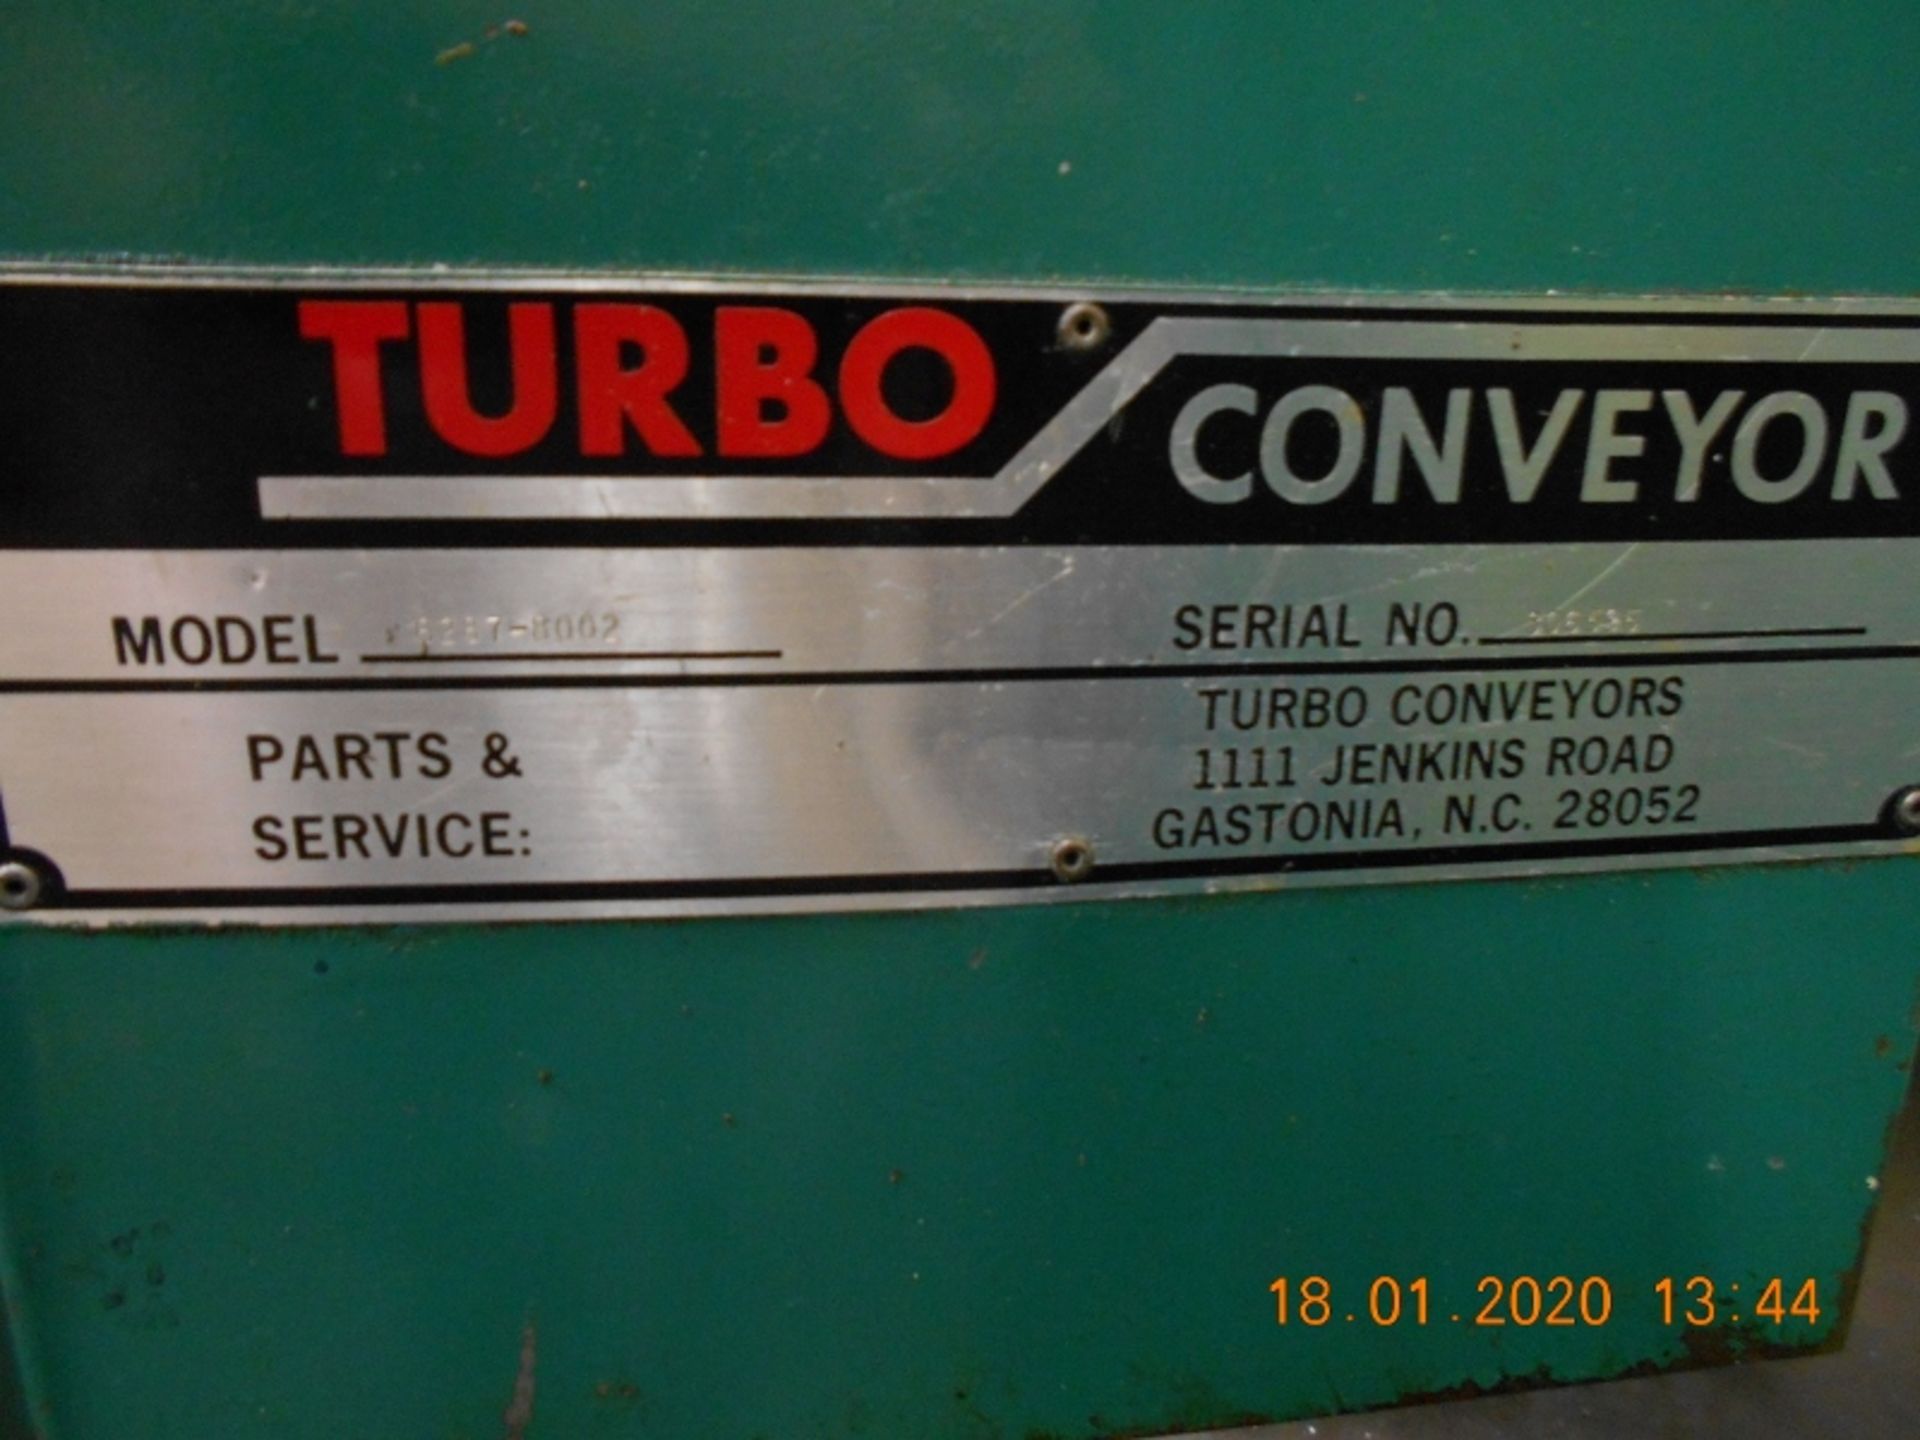 Turbo 6287-8002 Incline Chip Conveyor Serial #306595 - Image 3 of 4